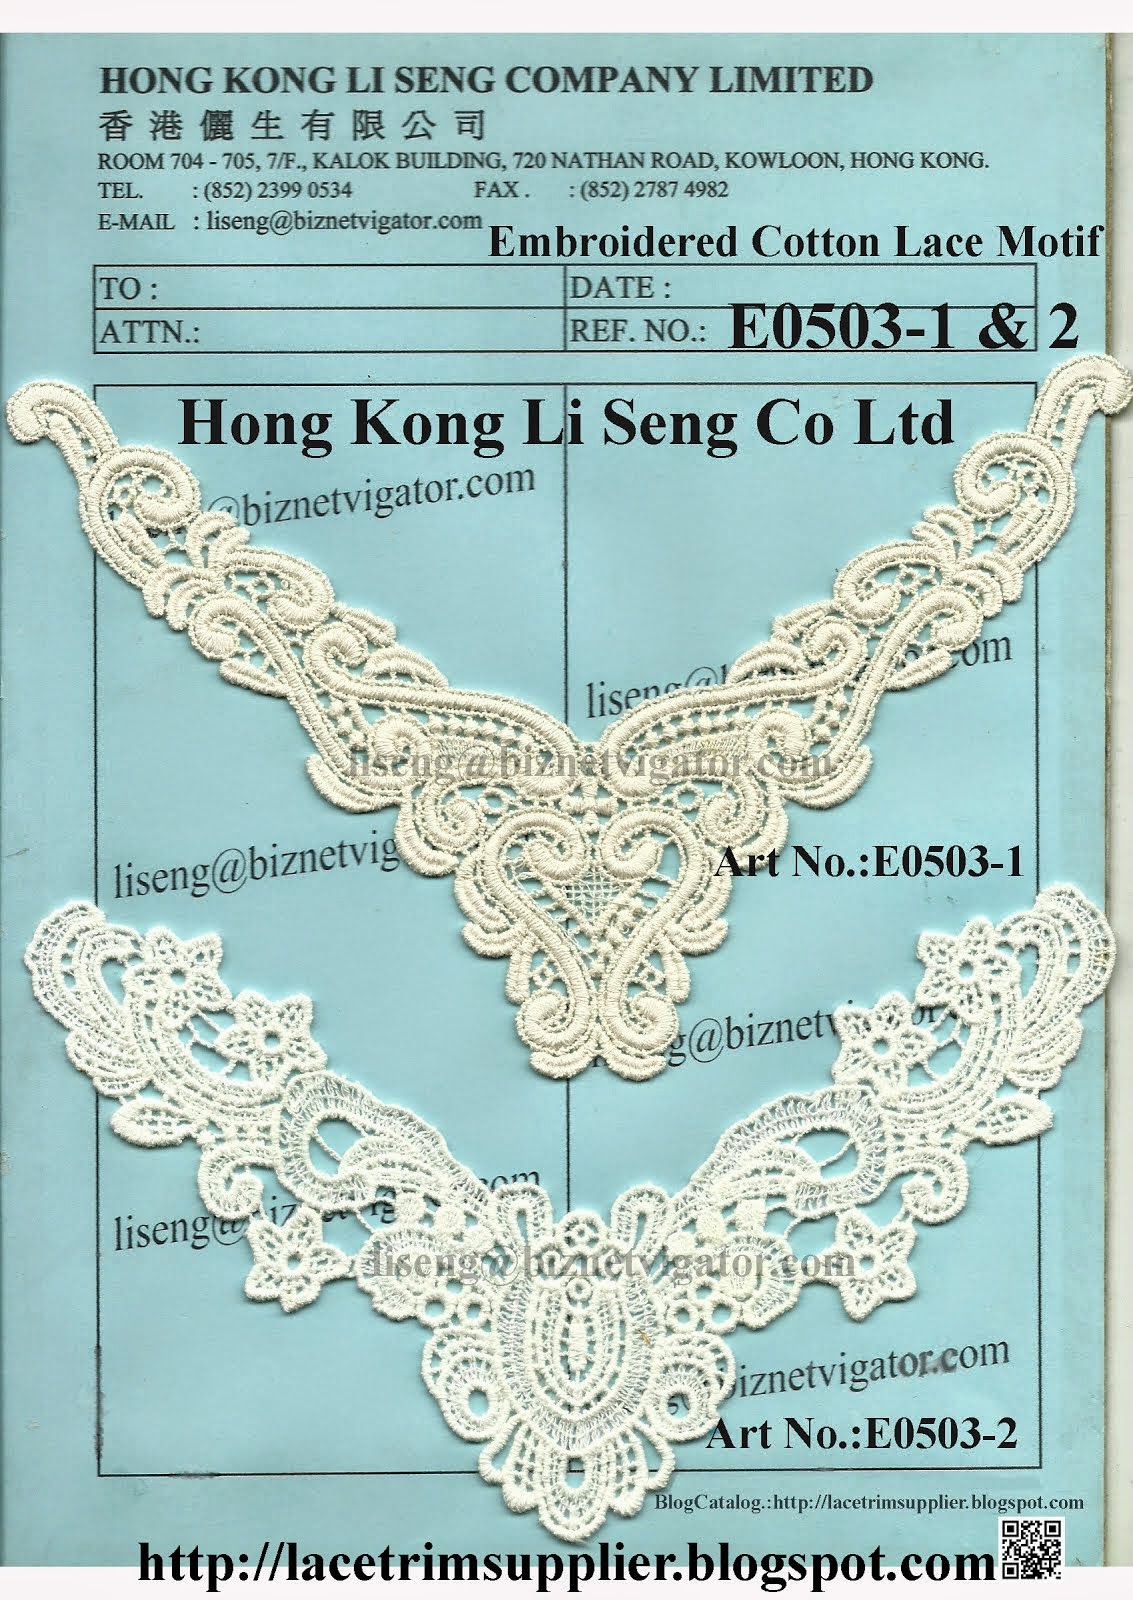 Embroidered Cotton Lace Motif Manufacturer and Supplier - Hong Kong Li Seng Co Ltd